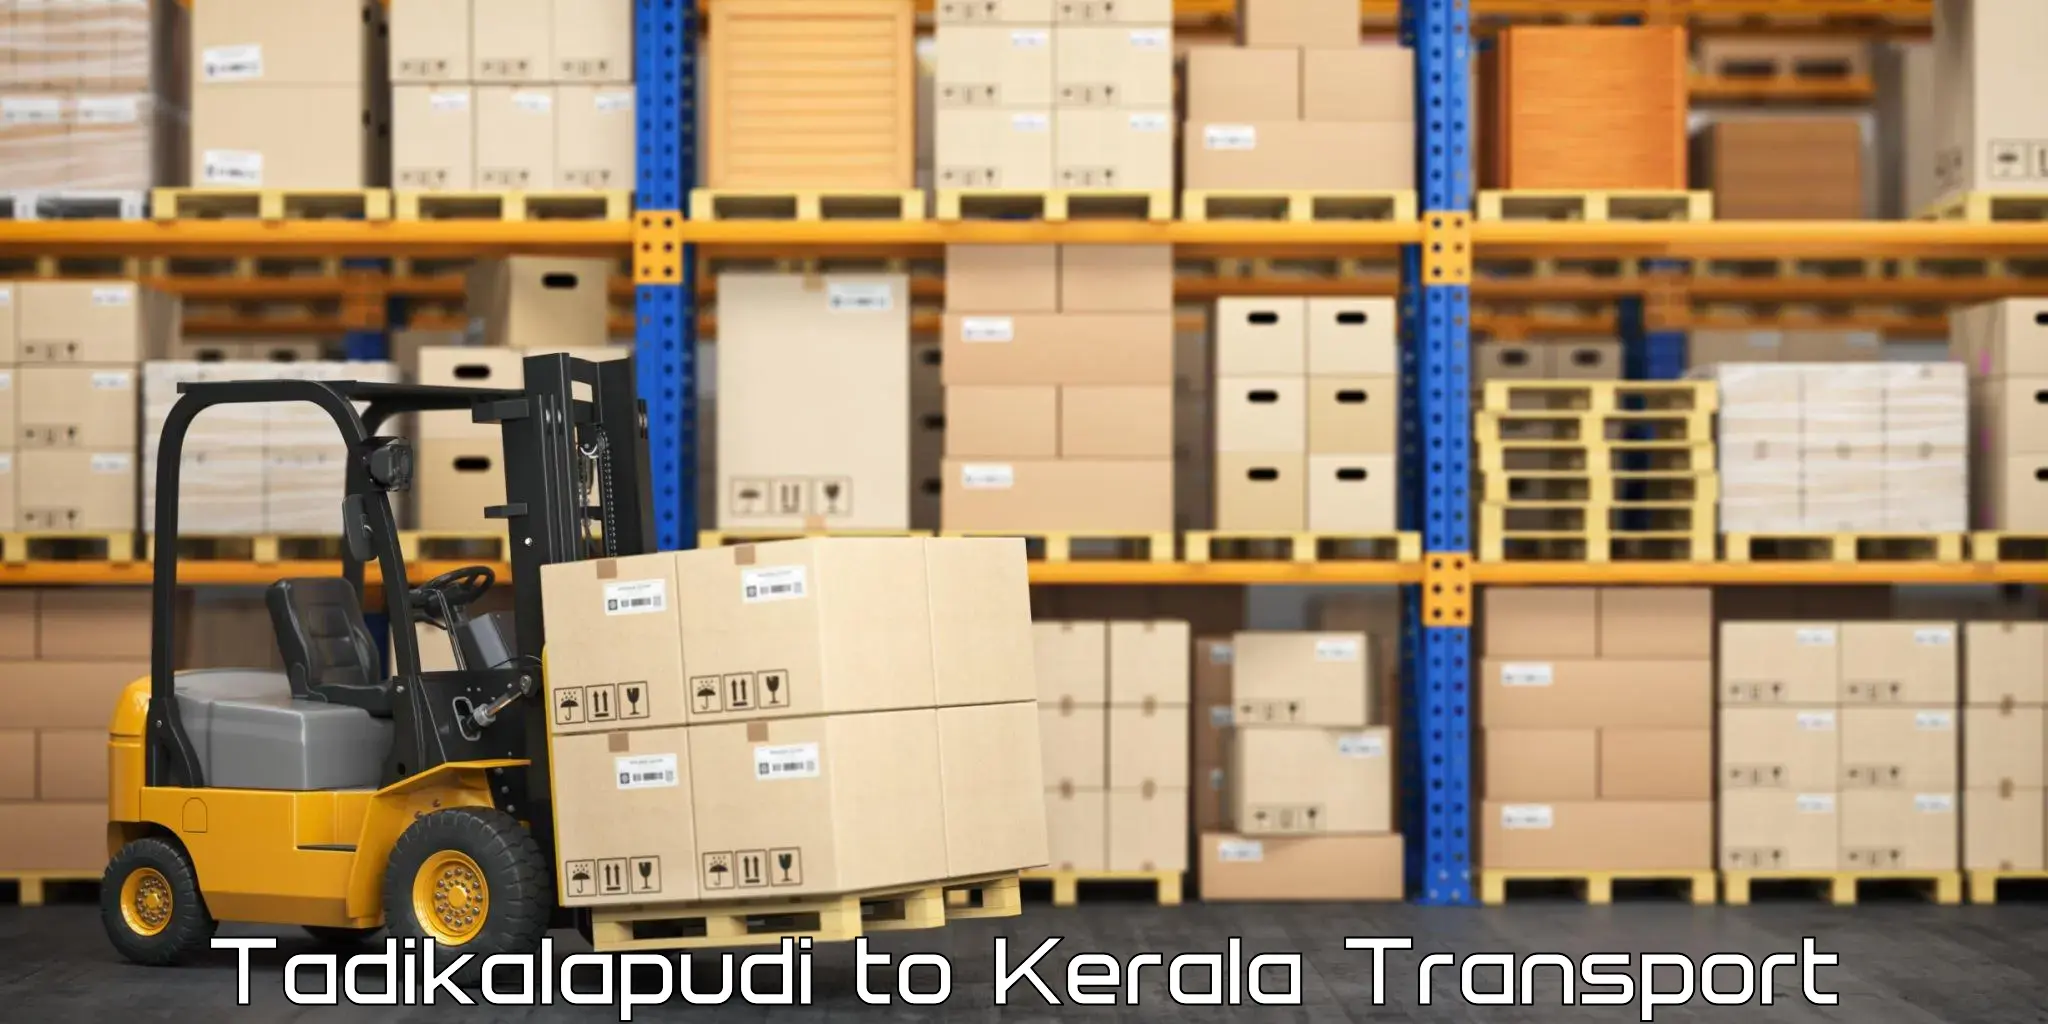 Transport in sharing Tadikalapudi to Sreekandapuram